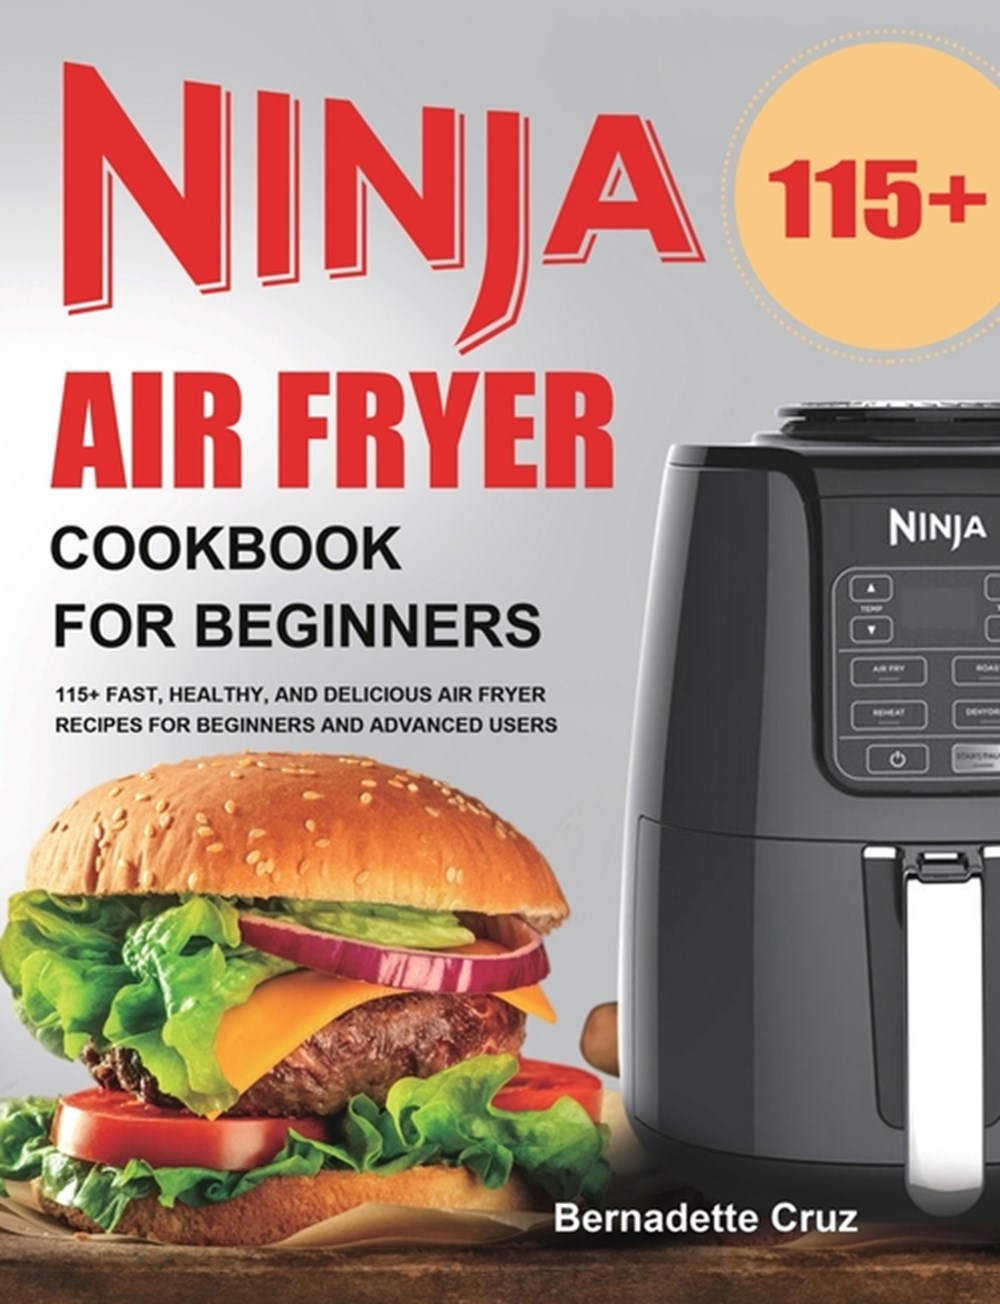 Buy Ninja Air Fryer Cookbook for Beginners 115+ Fast, Healthy, and